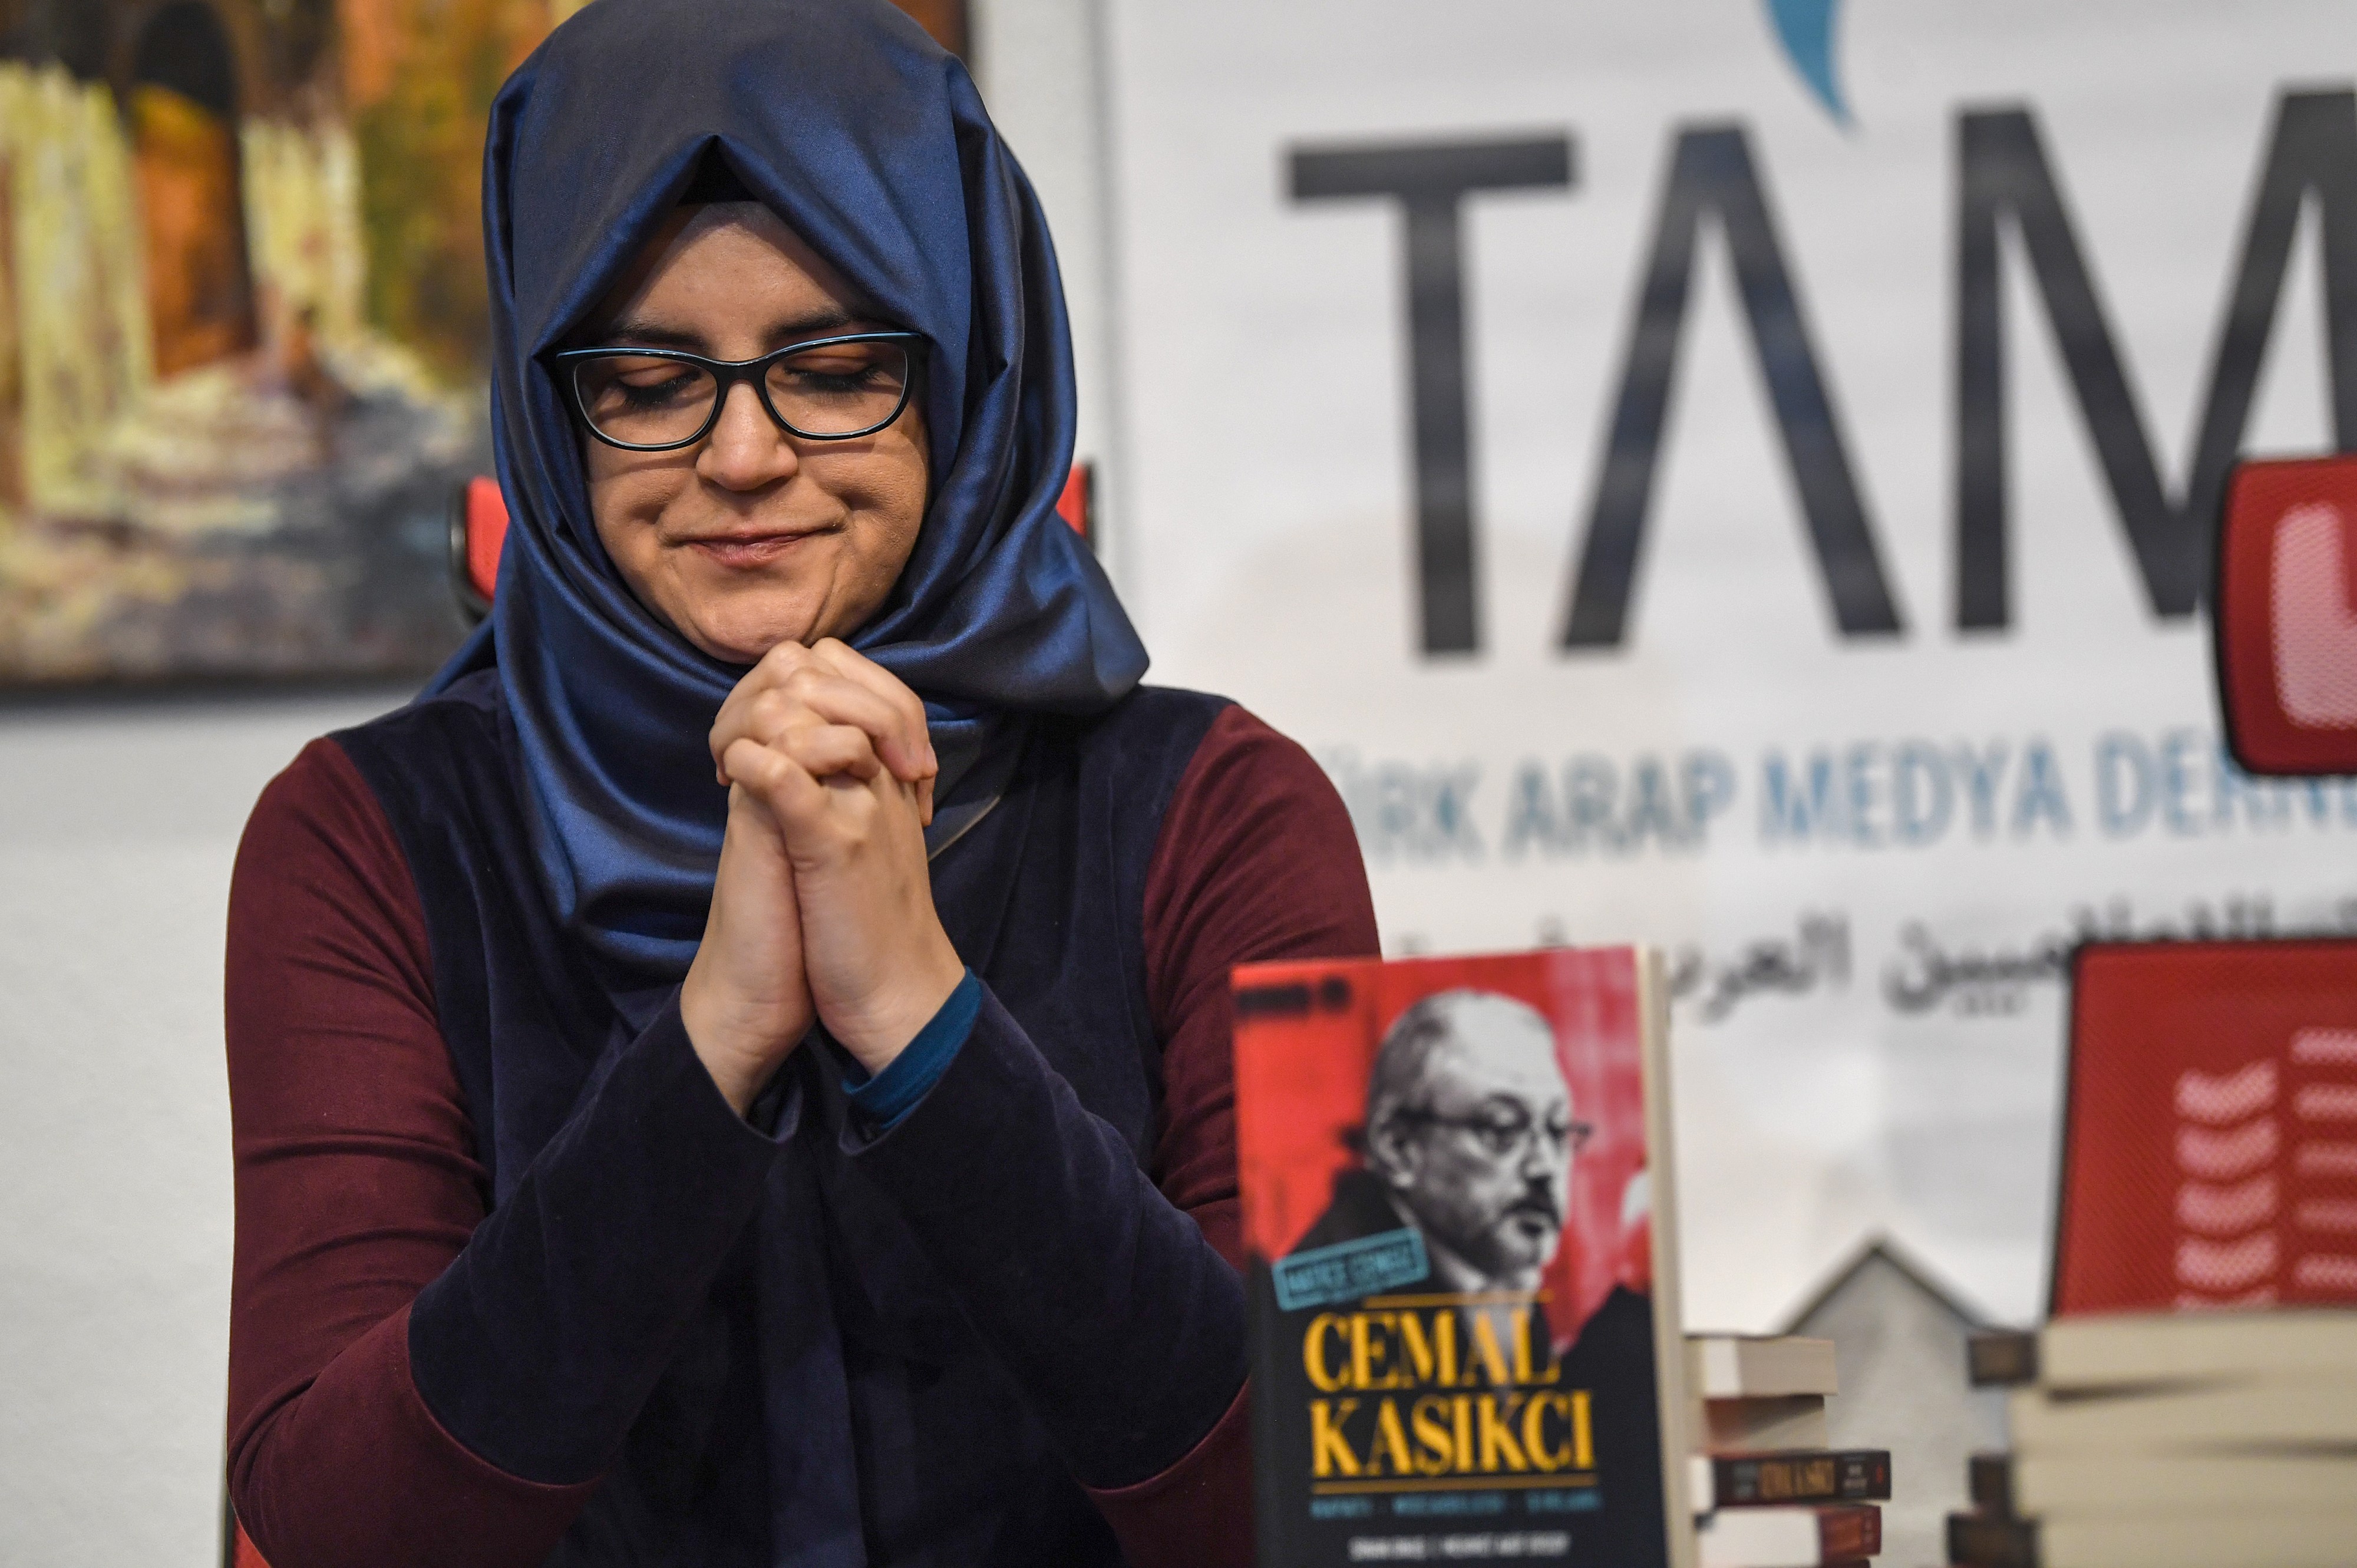 Hatice Cengiz, fiancee of Jamal Khashoggi sits next to her book on February 8, 2019 during a presentation press conference of a book named "Jamal Khashoggi" in Istanbul (AFP)